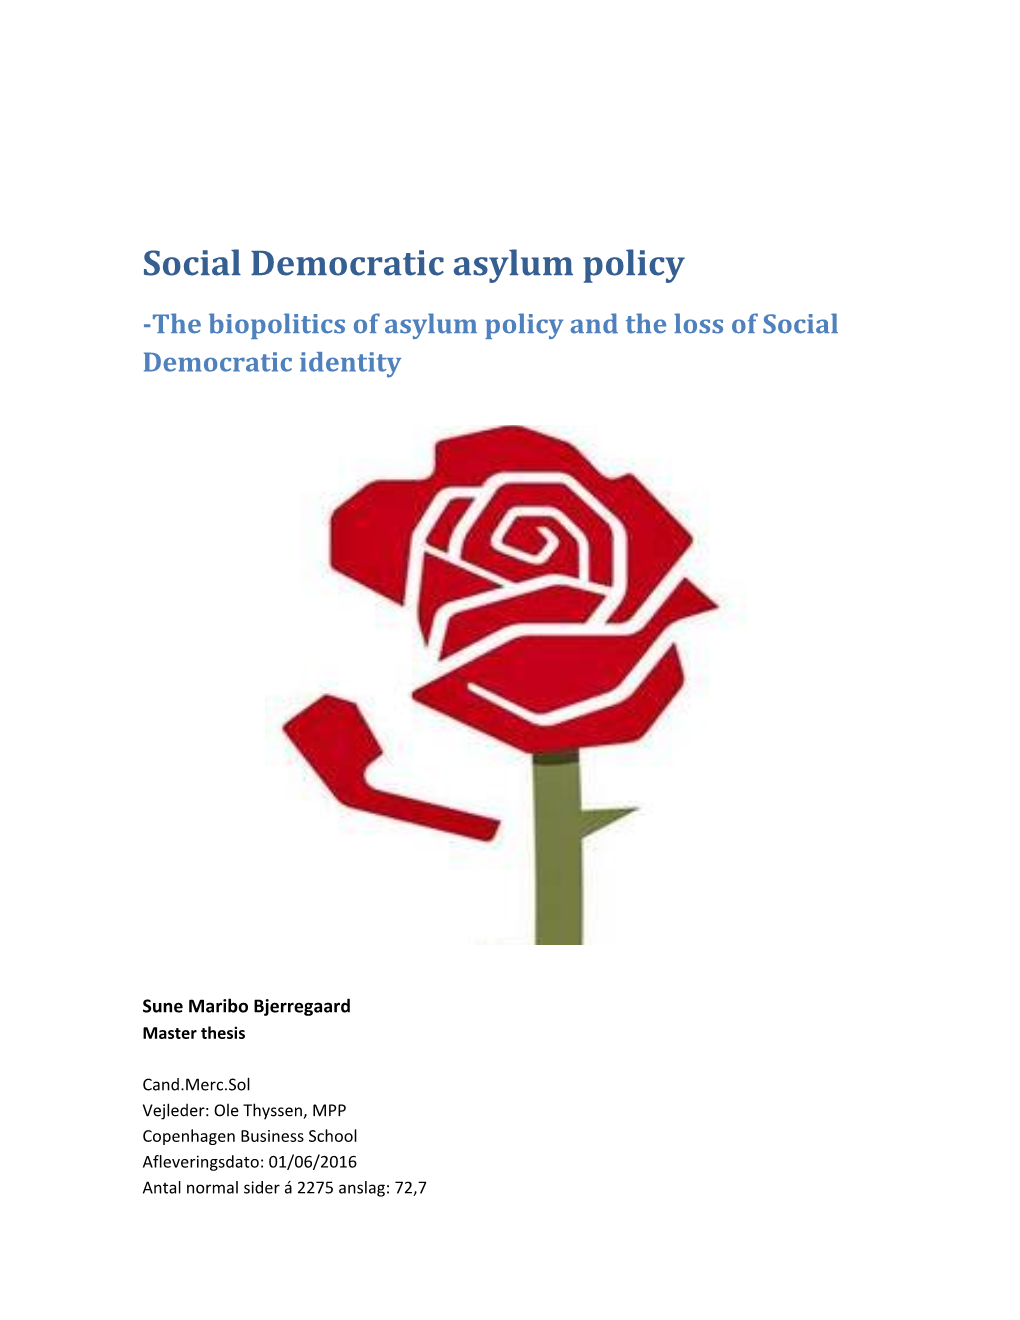 Social Democratic Asylum Policy -The Biopolitics of Asylum Policy and the Loss of Social Democratic Identity